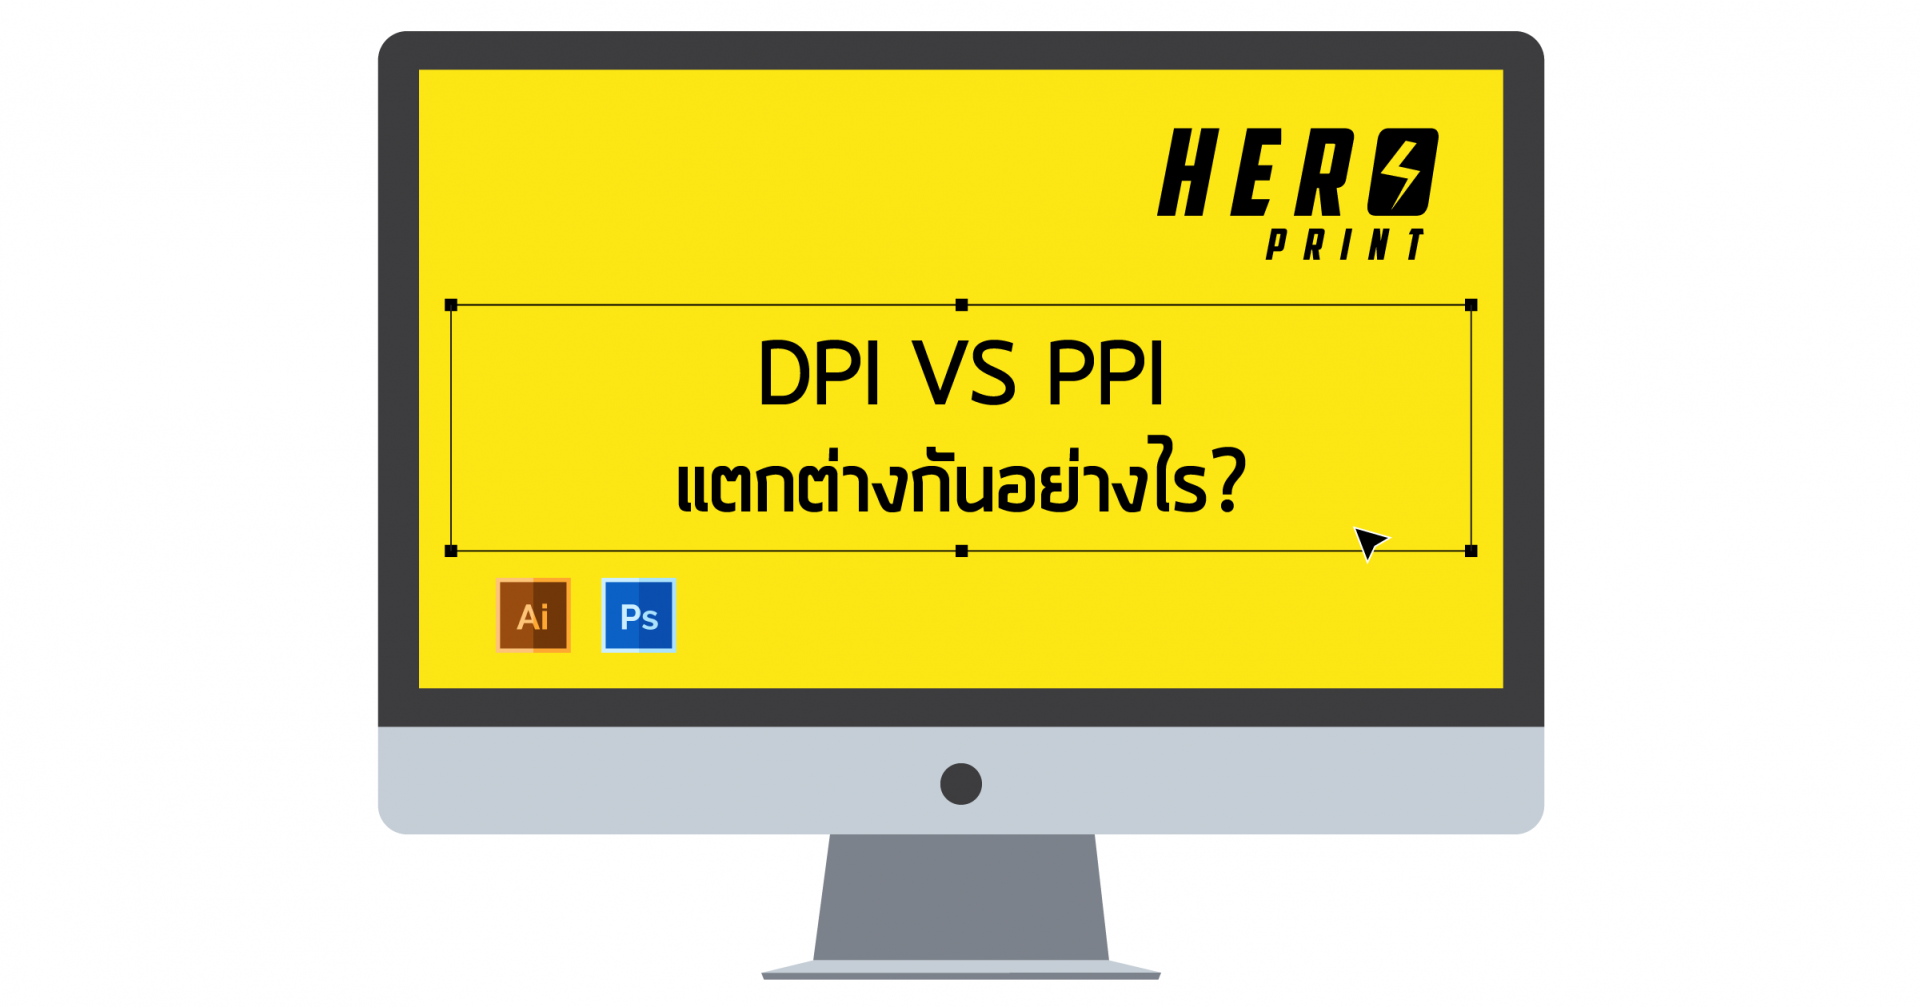 DPI VS PPI แตกต่างกันอย่างไร ? 